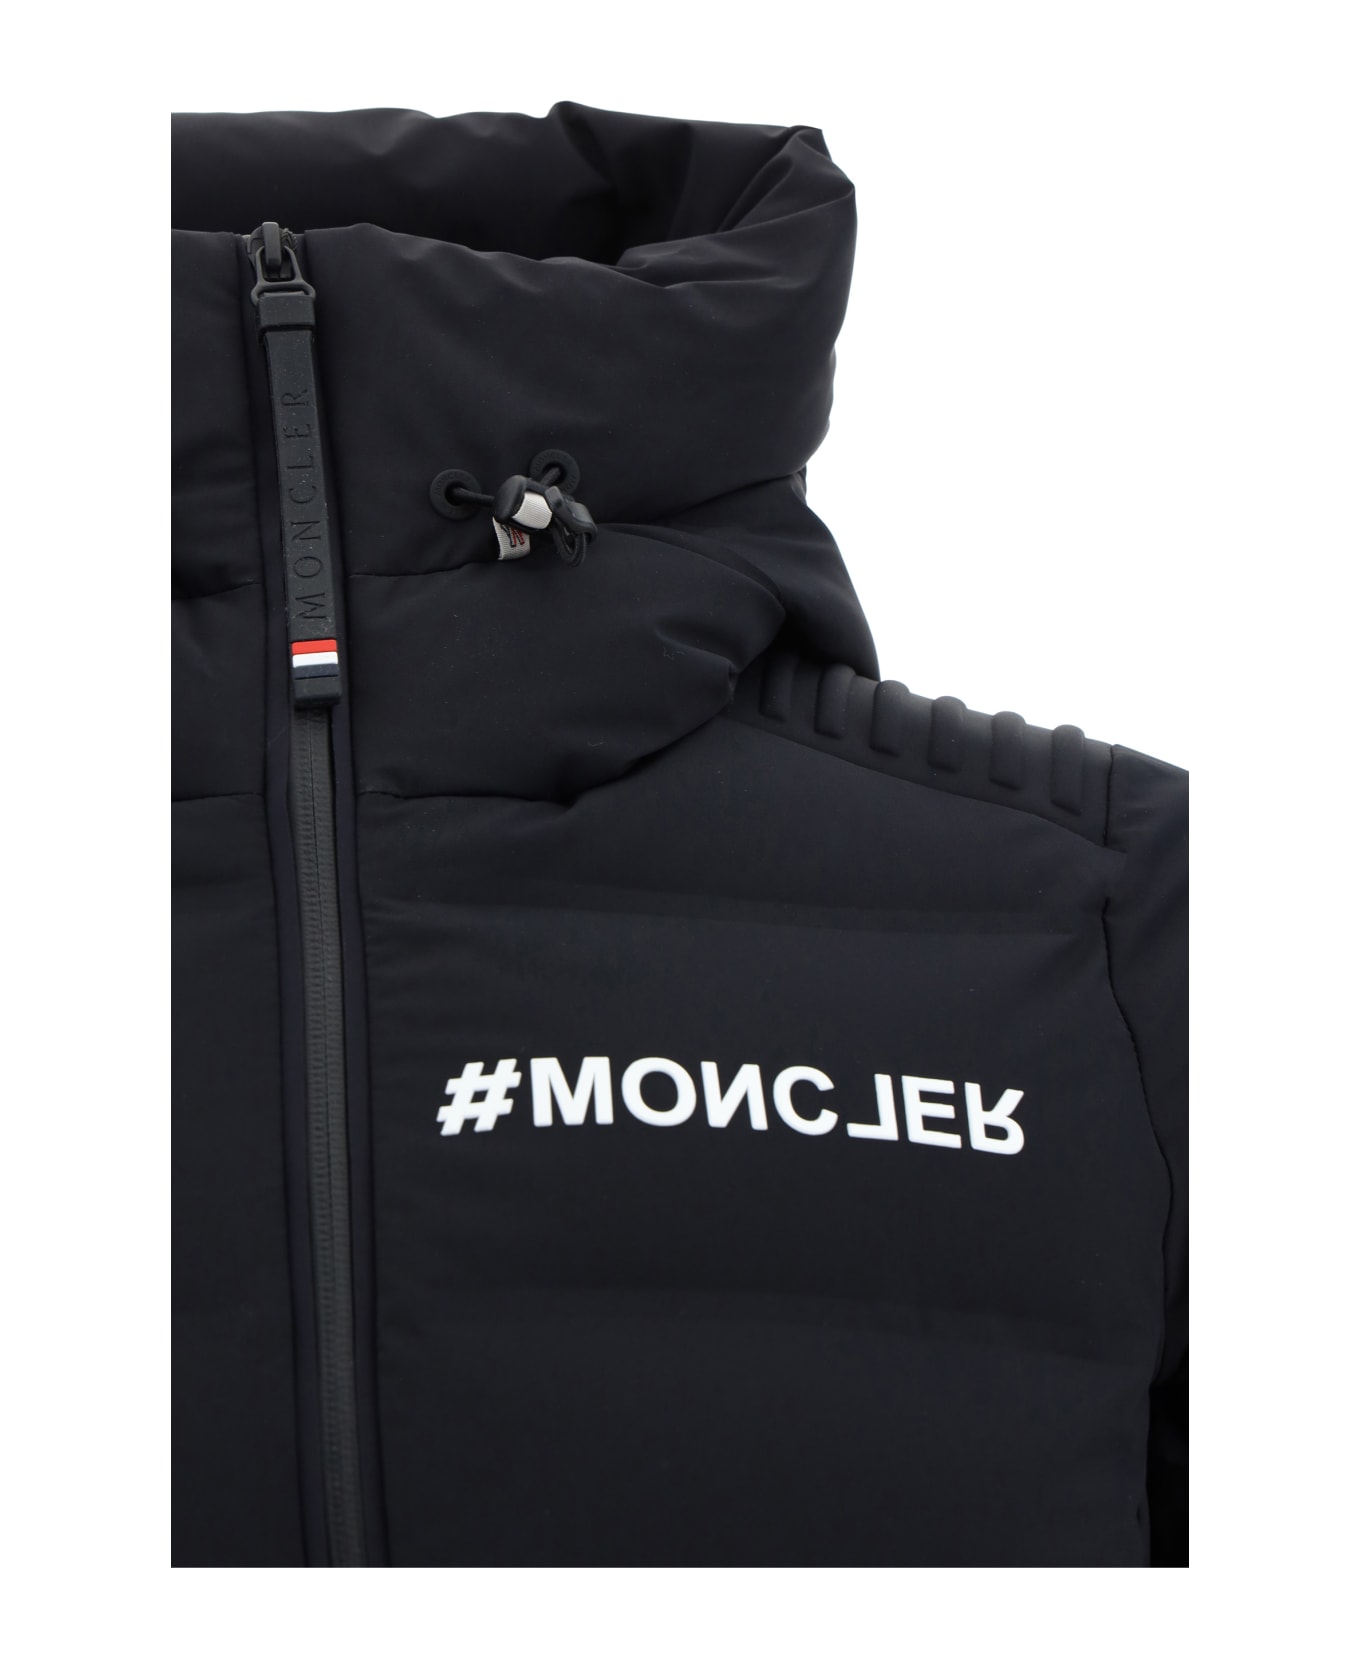 Moncler Grenoble Black Suisses Down Jacket - Black ダウンジャケット